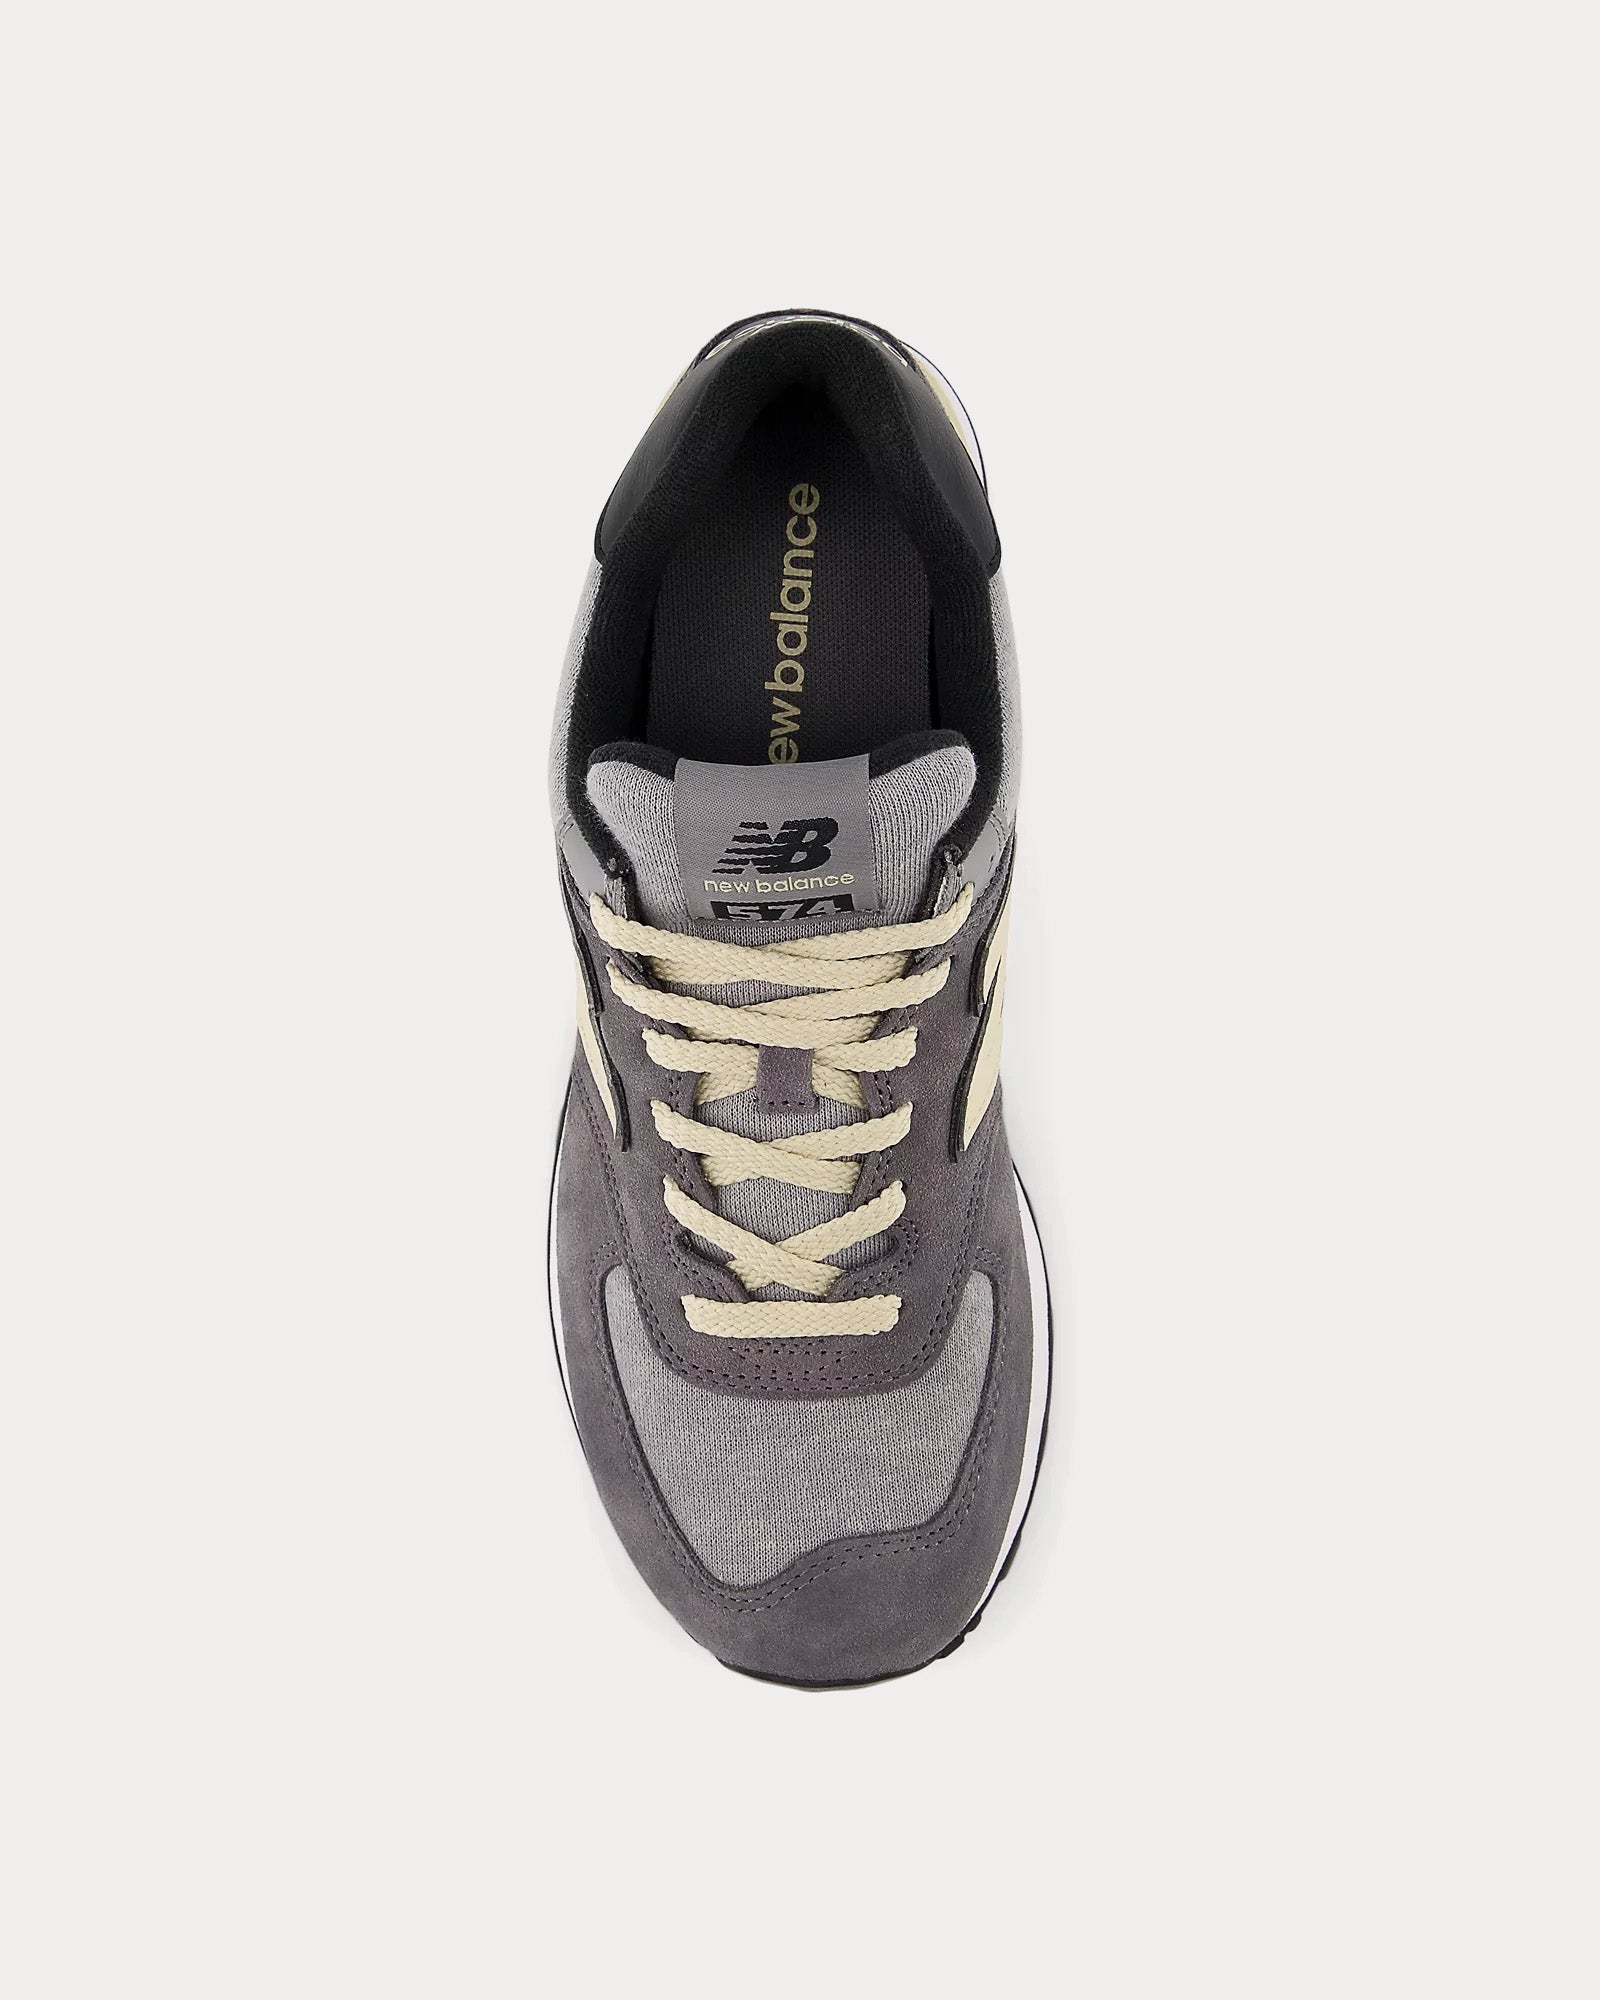 New Balance - 574 Magnet / Sandstone Low Top Sneakers